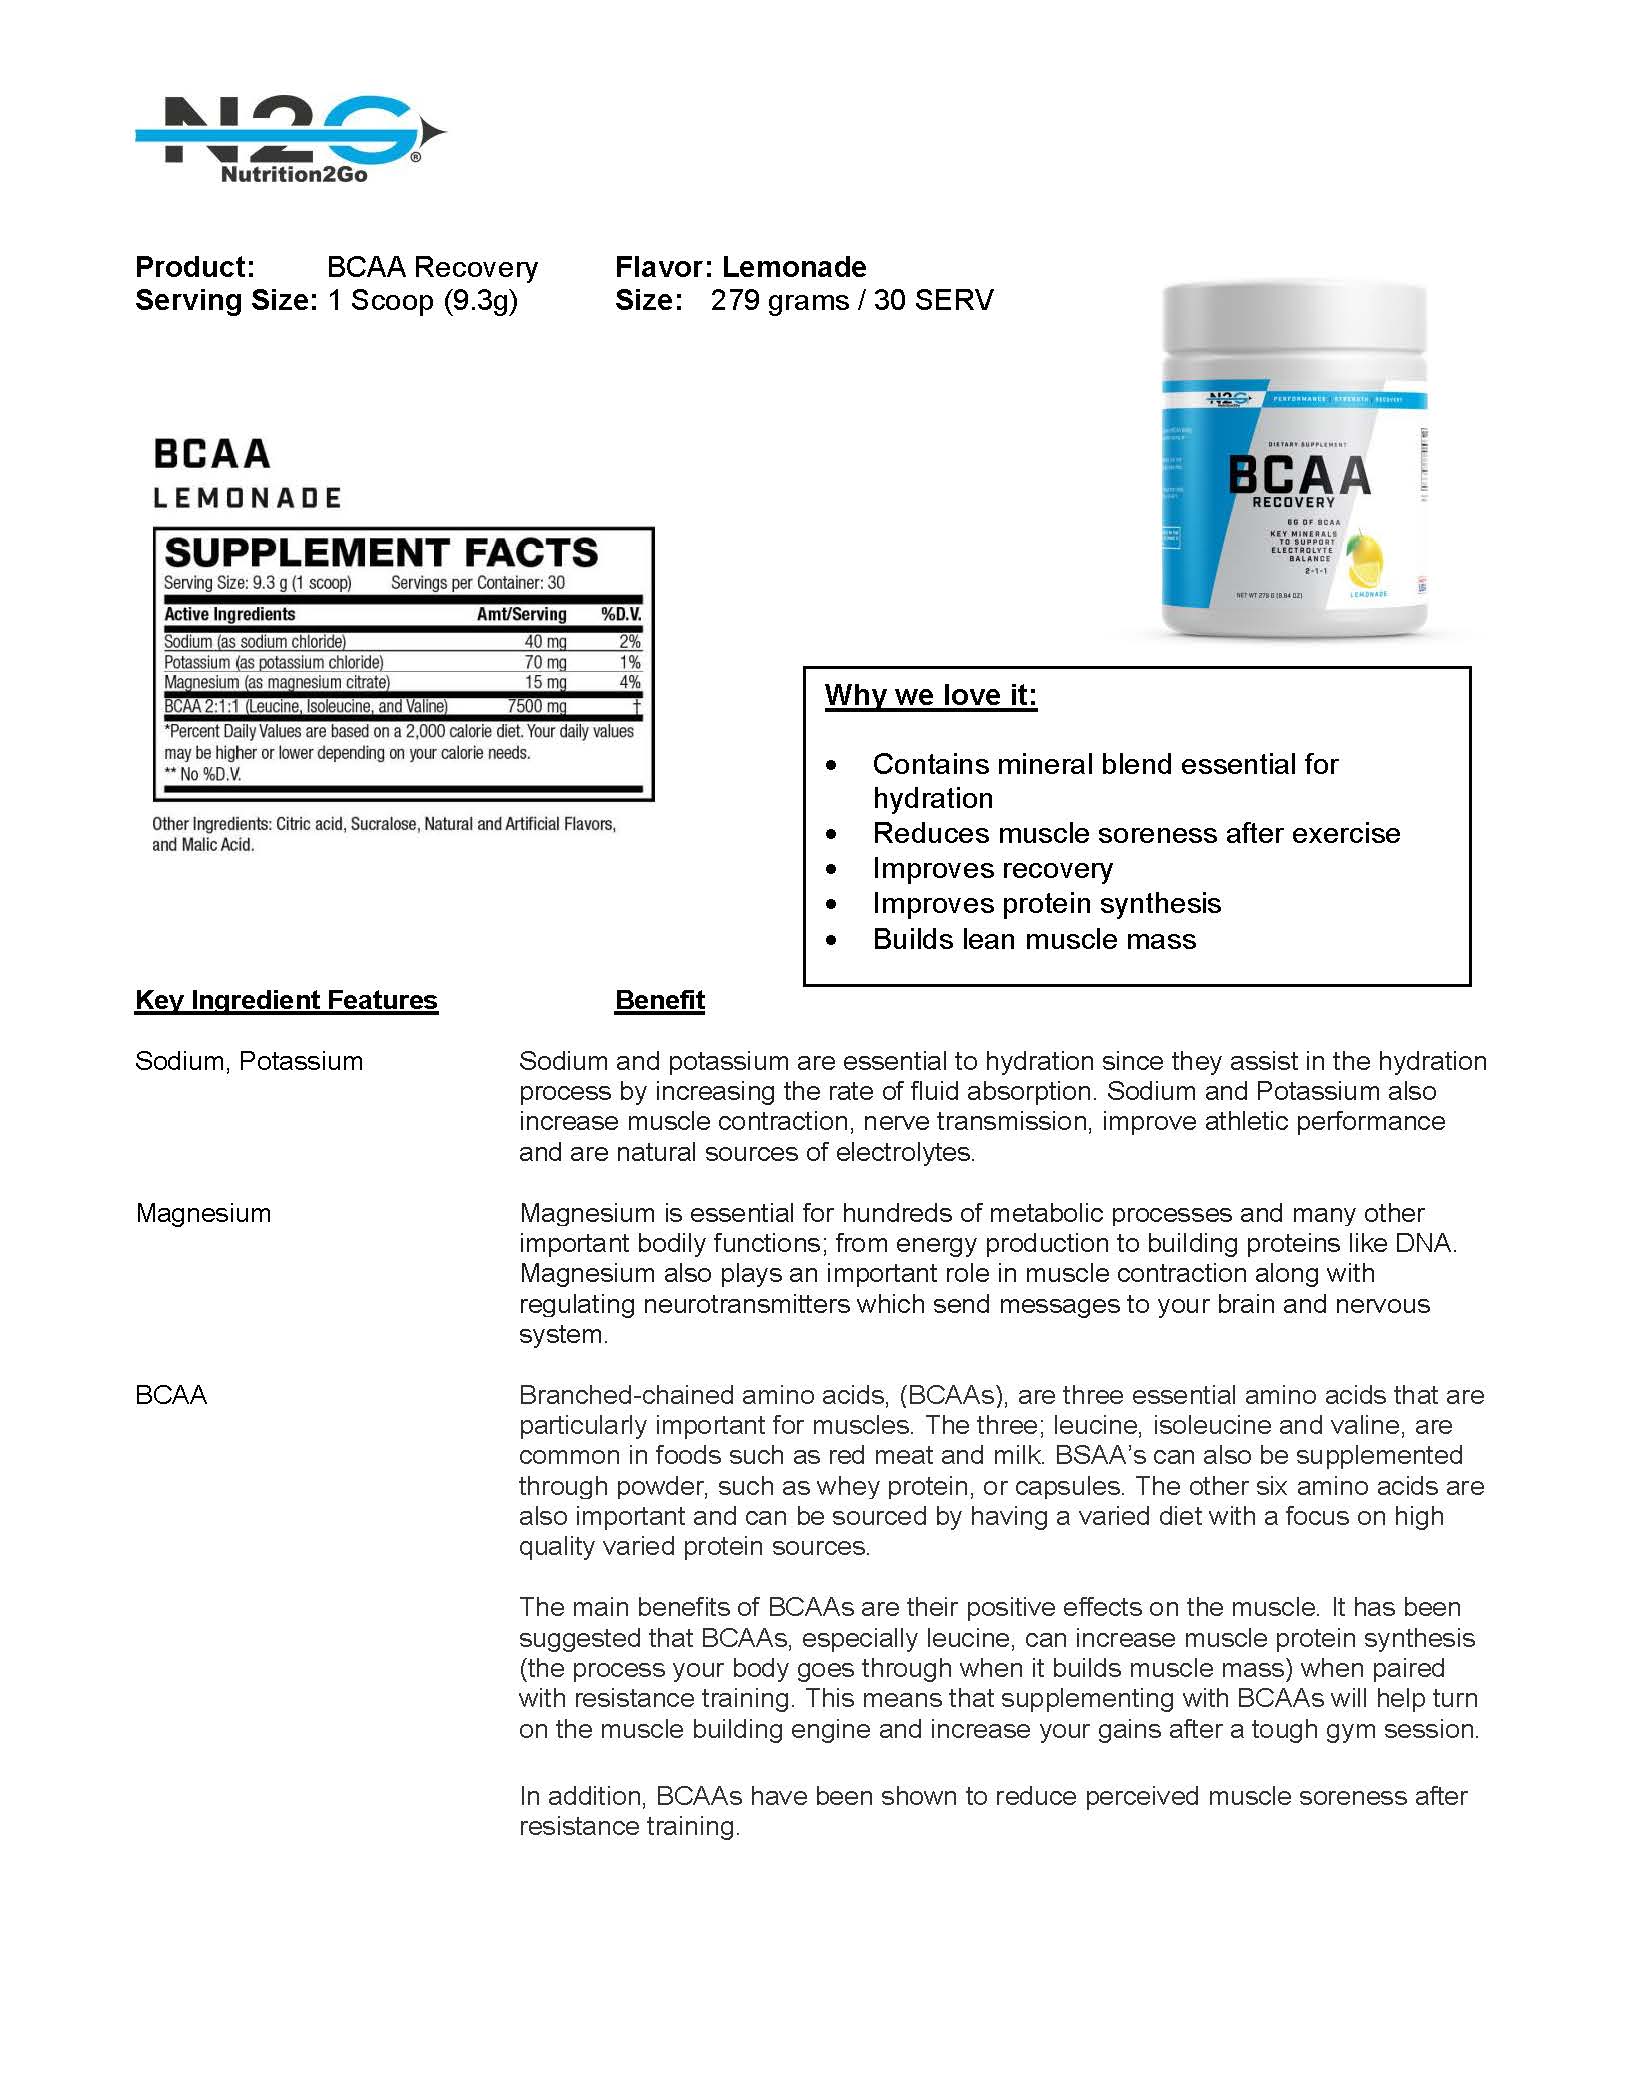 N2G Lemonade BCAA Recovery Product Fact Sheet